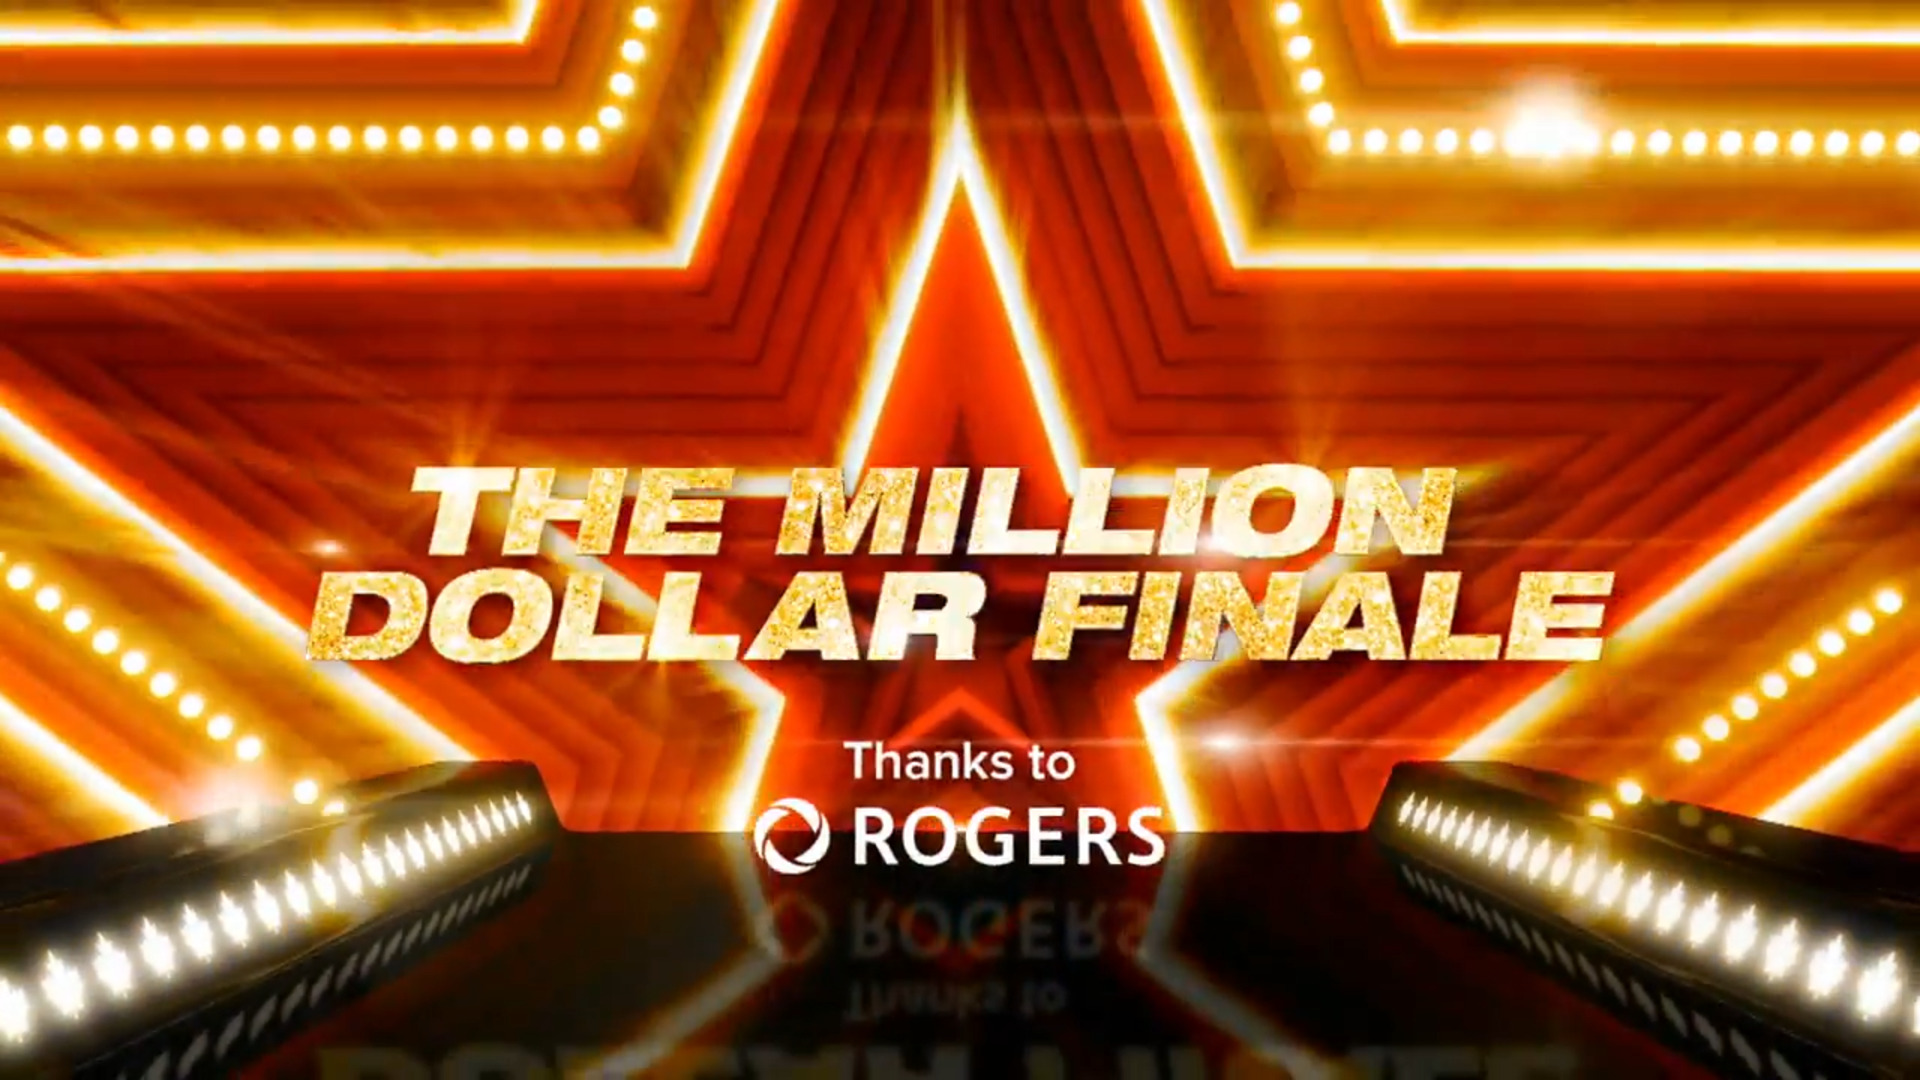 The Million Dollar Finale